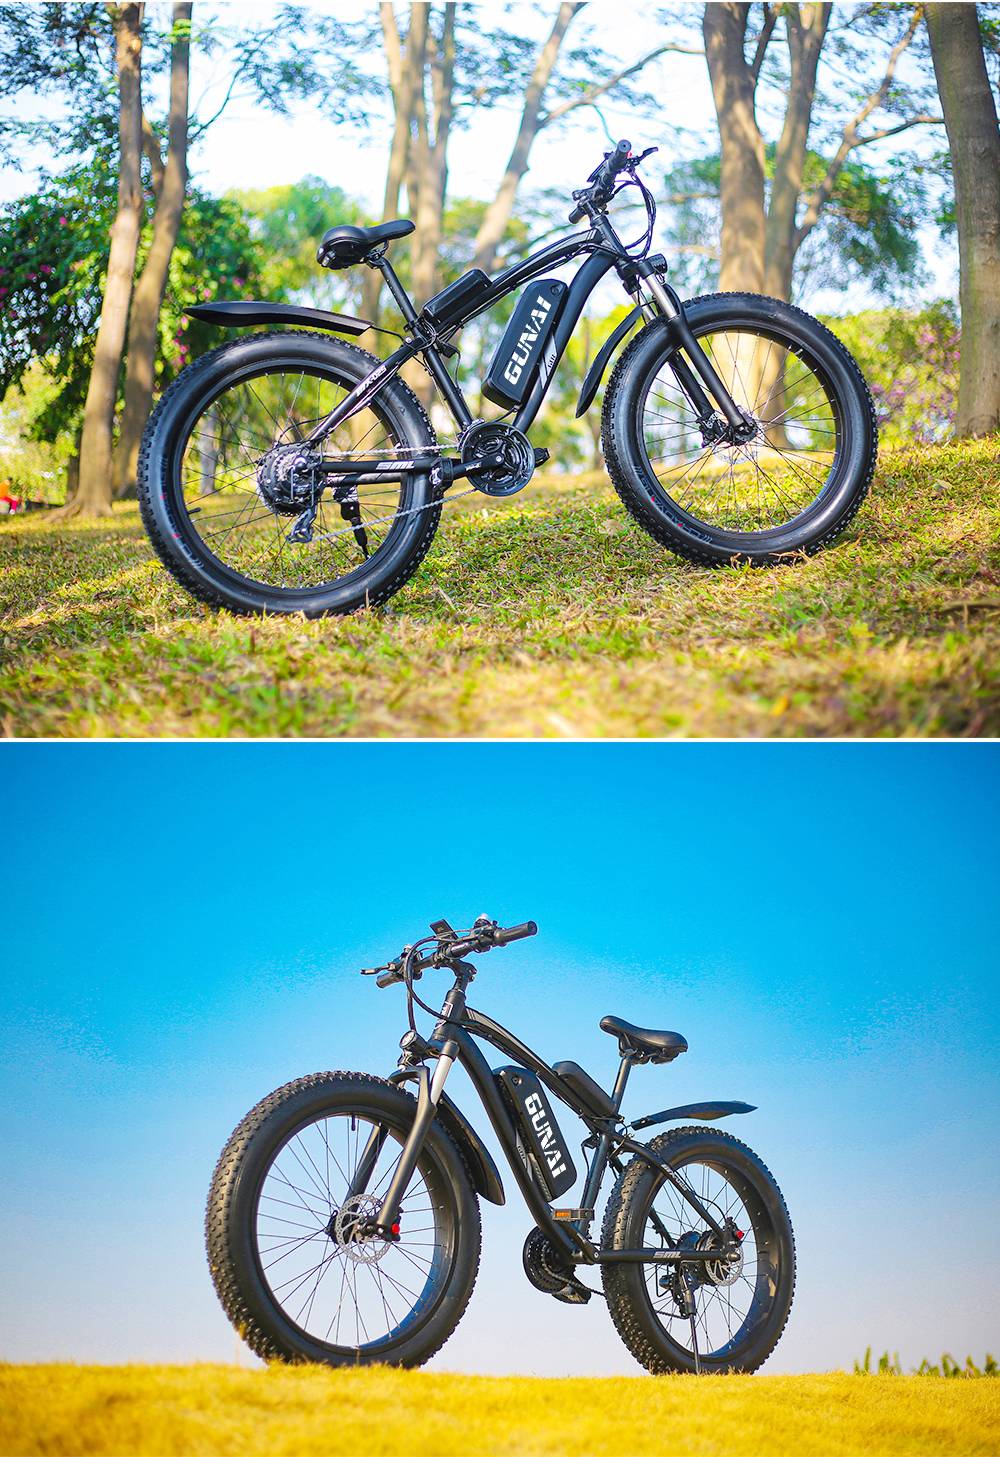 GUNAI MX02S 1000W 48V 17Ah 26'' Electric Bicycle 40km/h Max Speed 40-50km Mileage Range 150kg Max Load - Blue